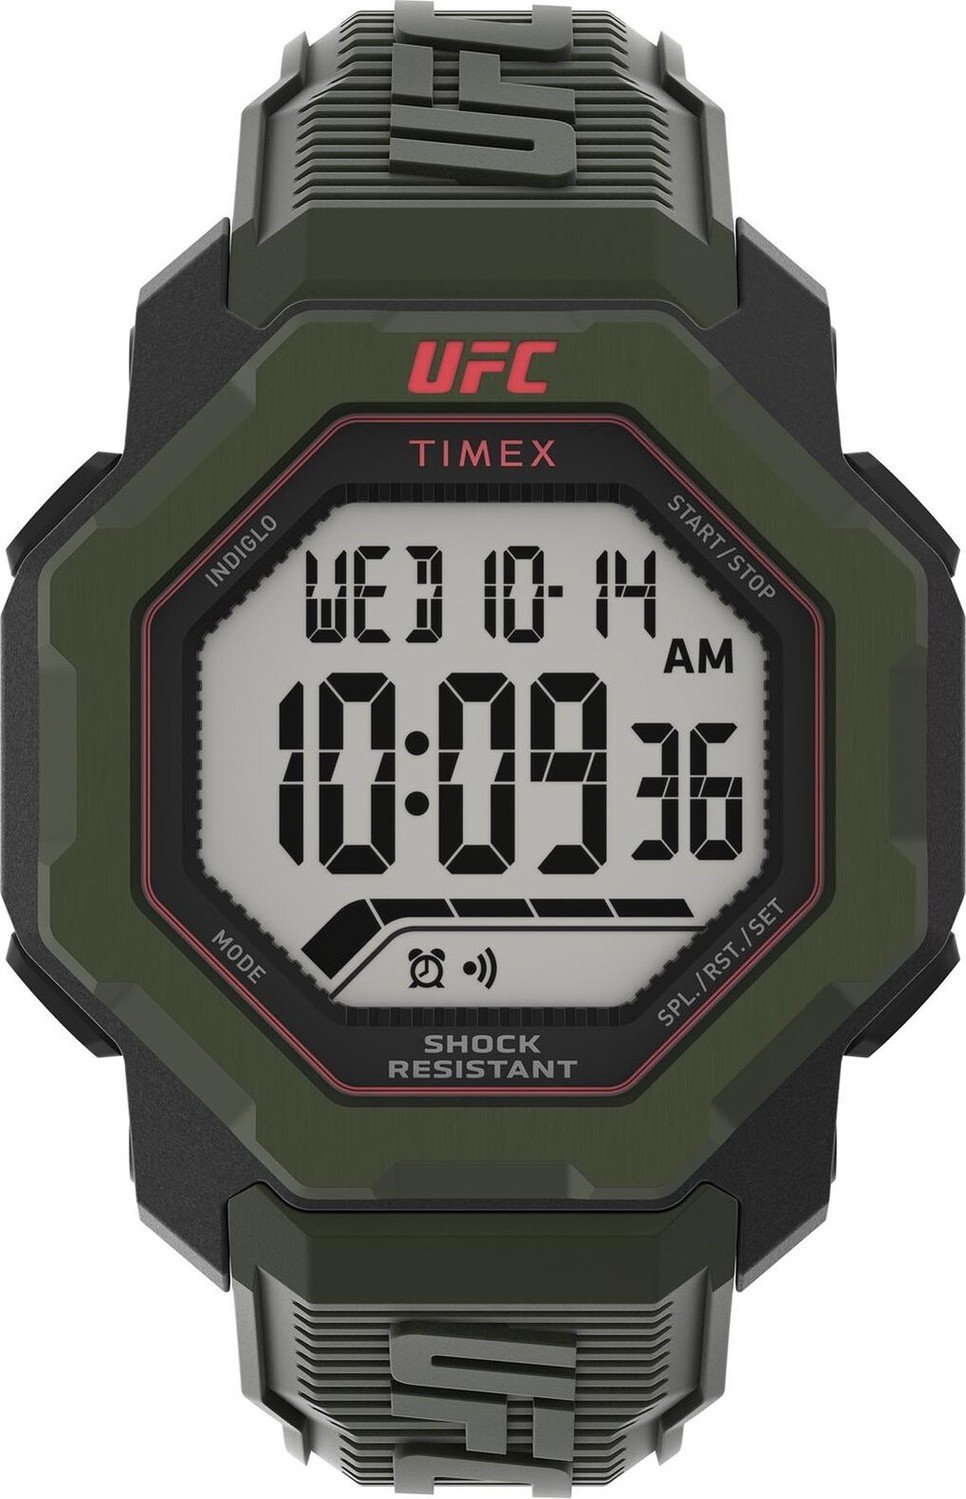 Hodinky Timex Ufc Strenght Knockout TW2V88300 Green/Black